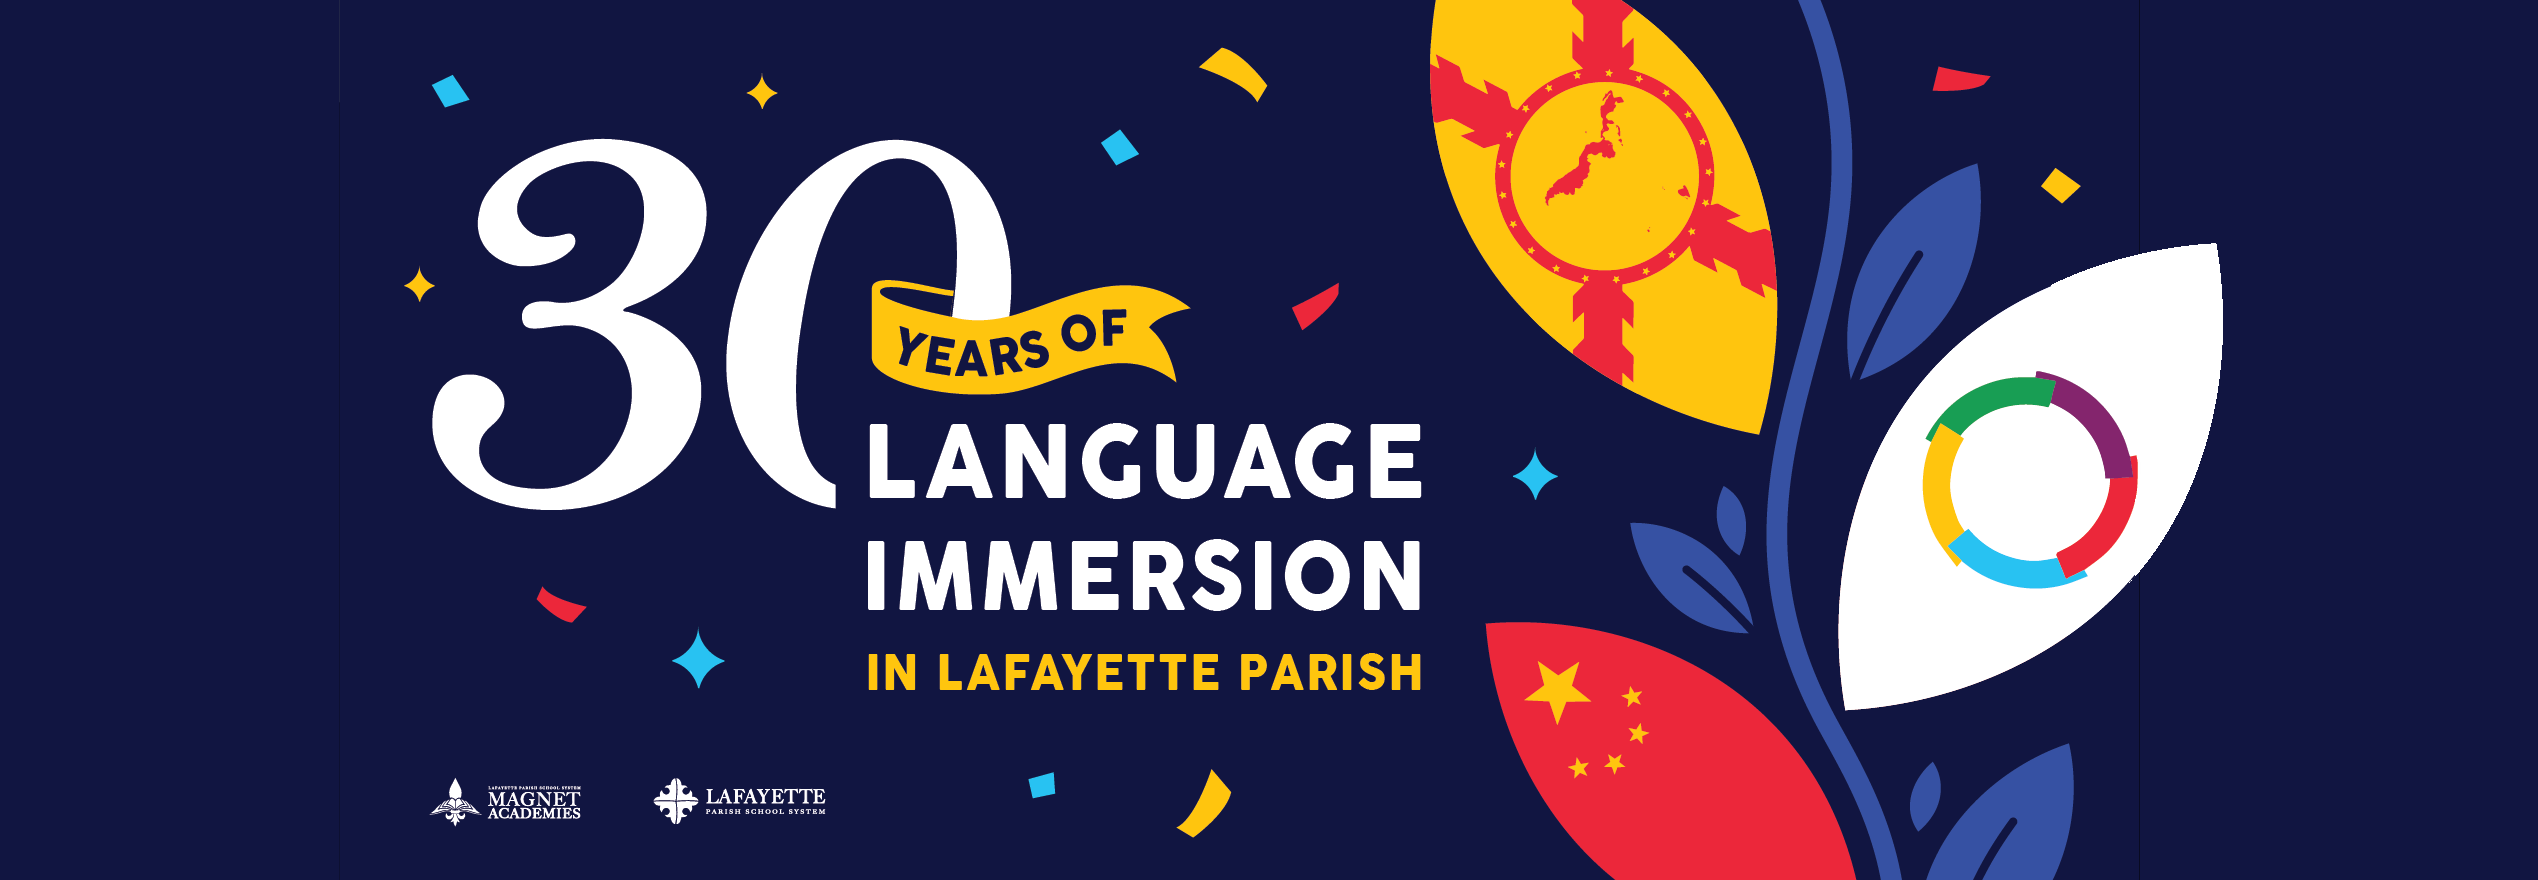 Celebrating 30 years of Language Immersion in Lafayette Parish